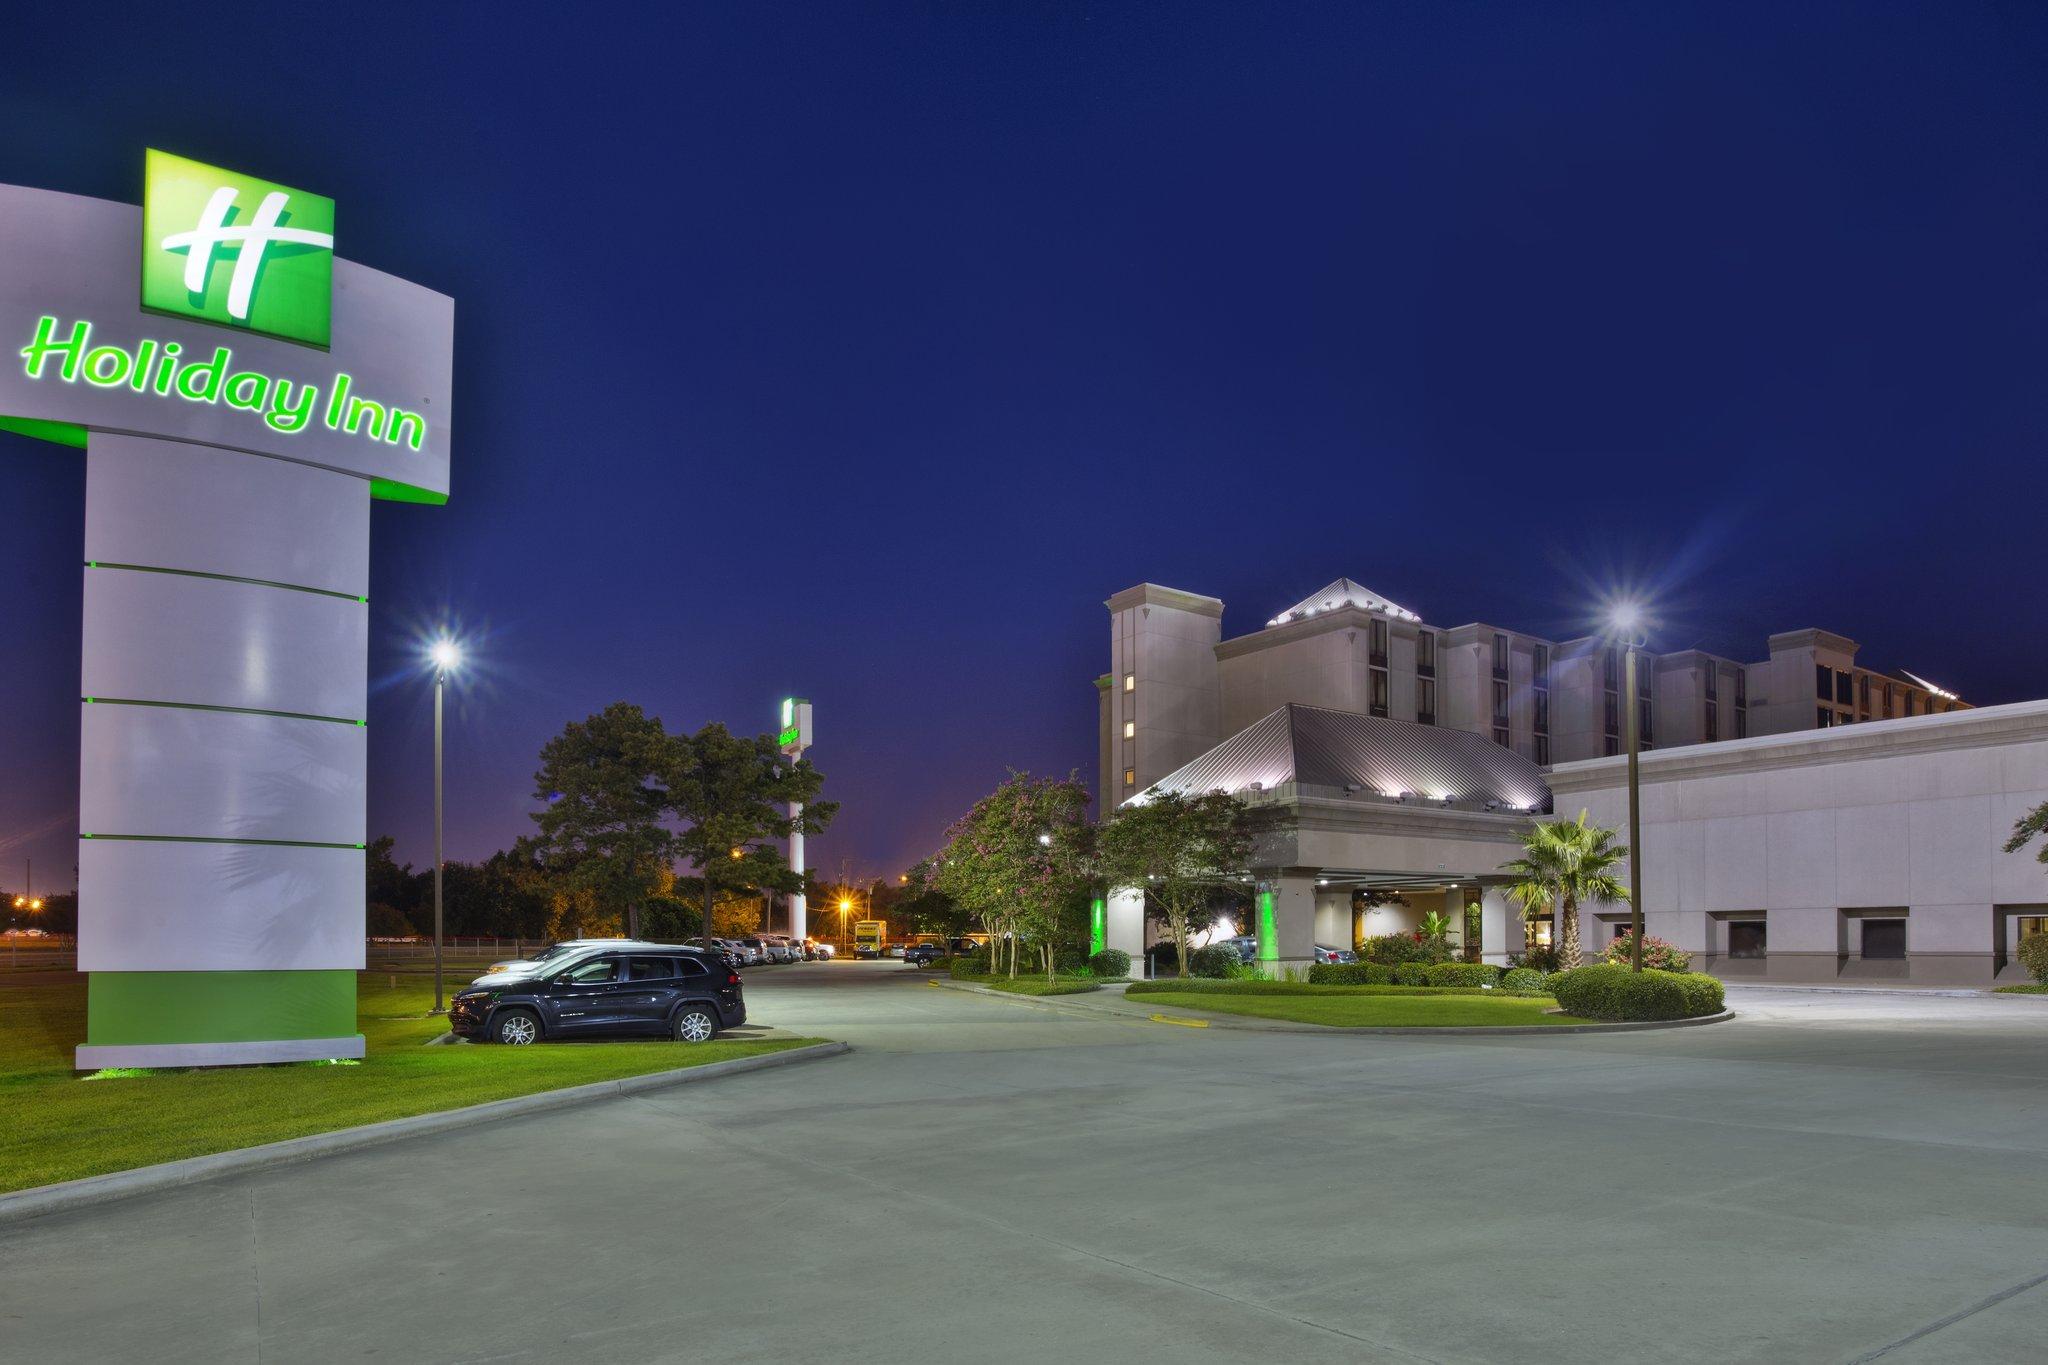 Holiday Inn Baton Rouge-South in Baton Rouge, LA